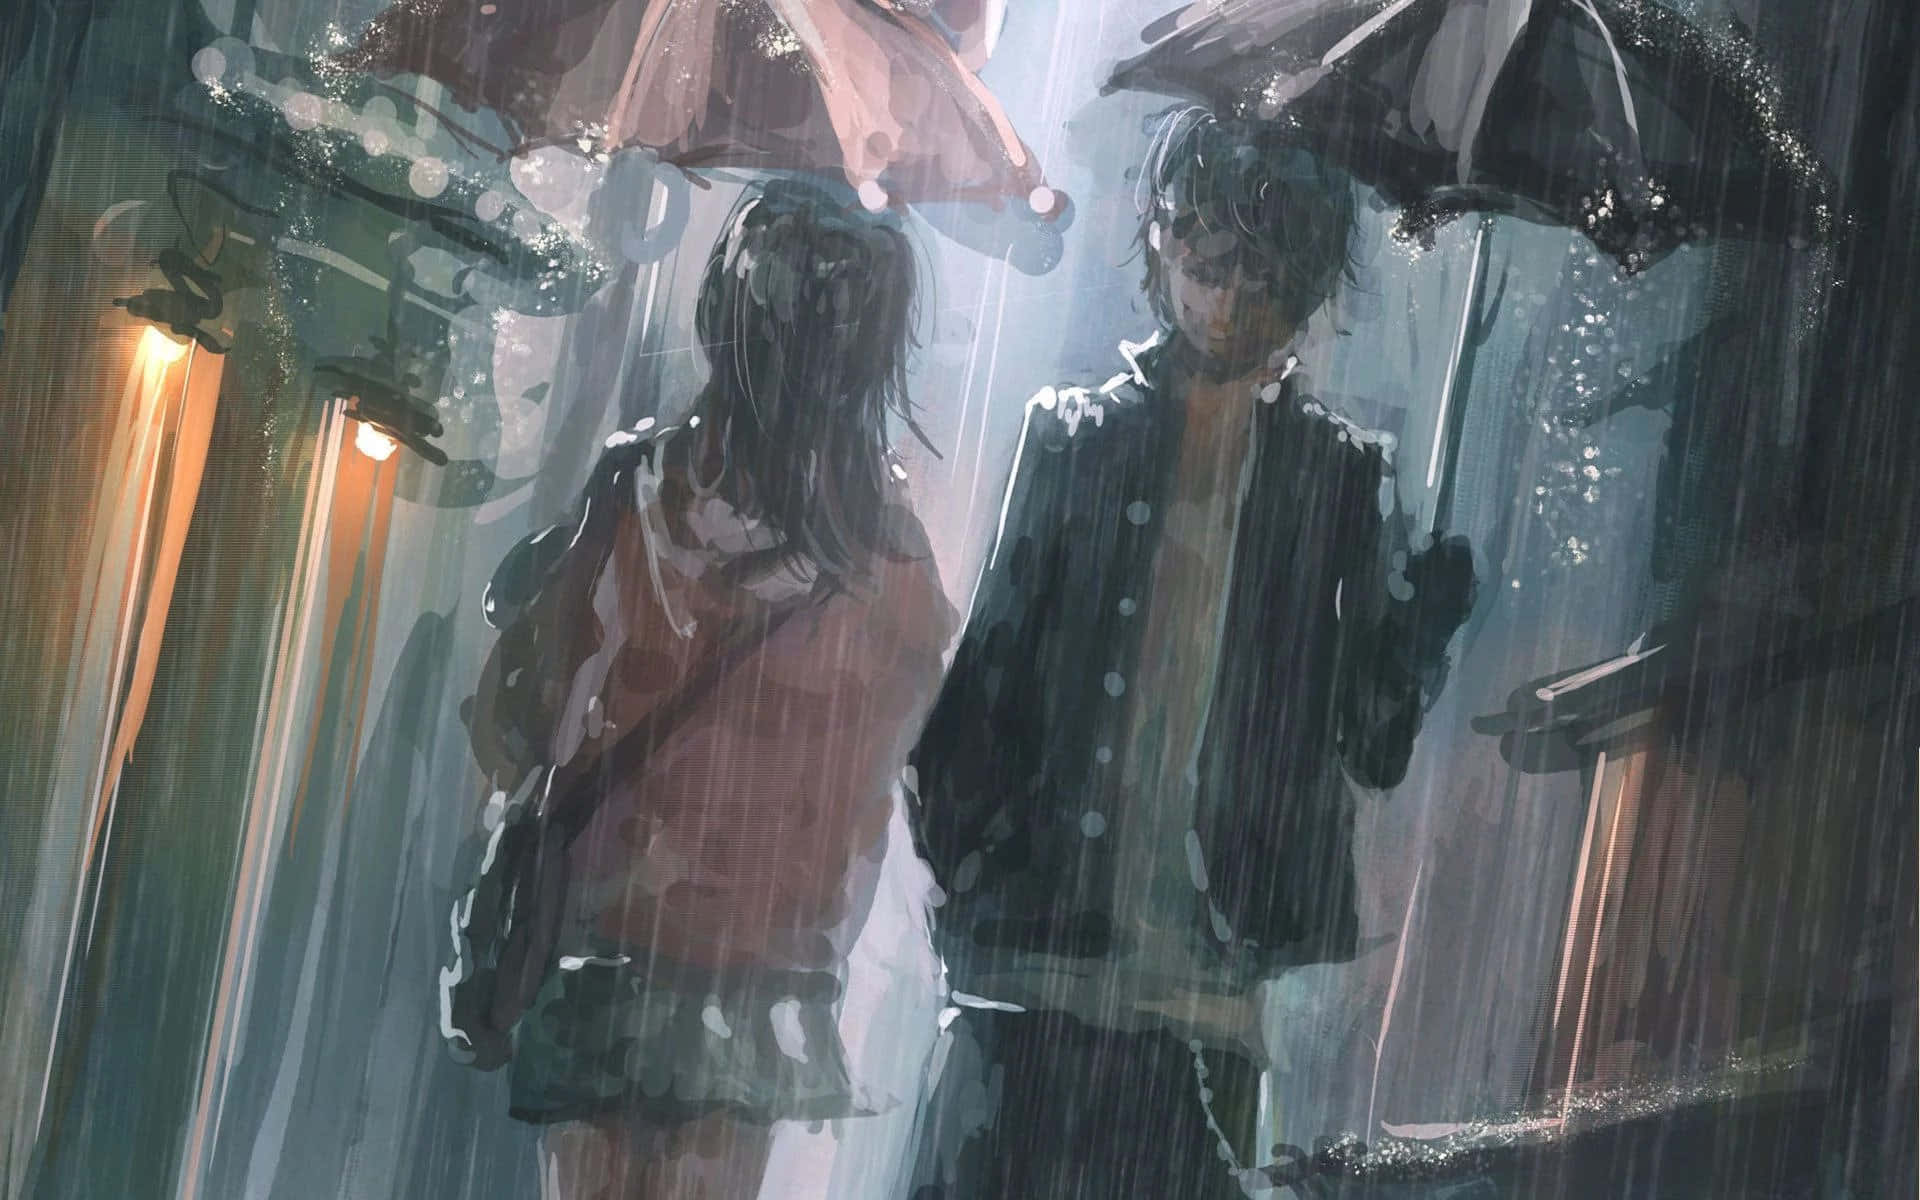 "The beauty of a rainy day"